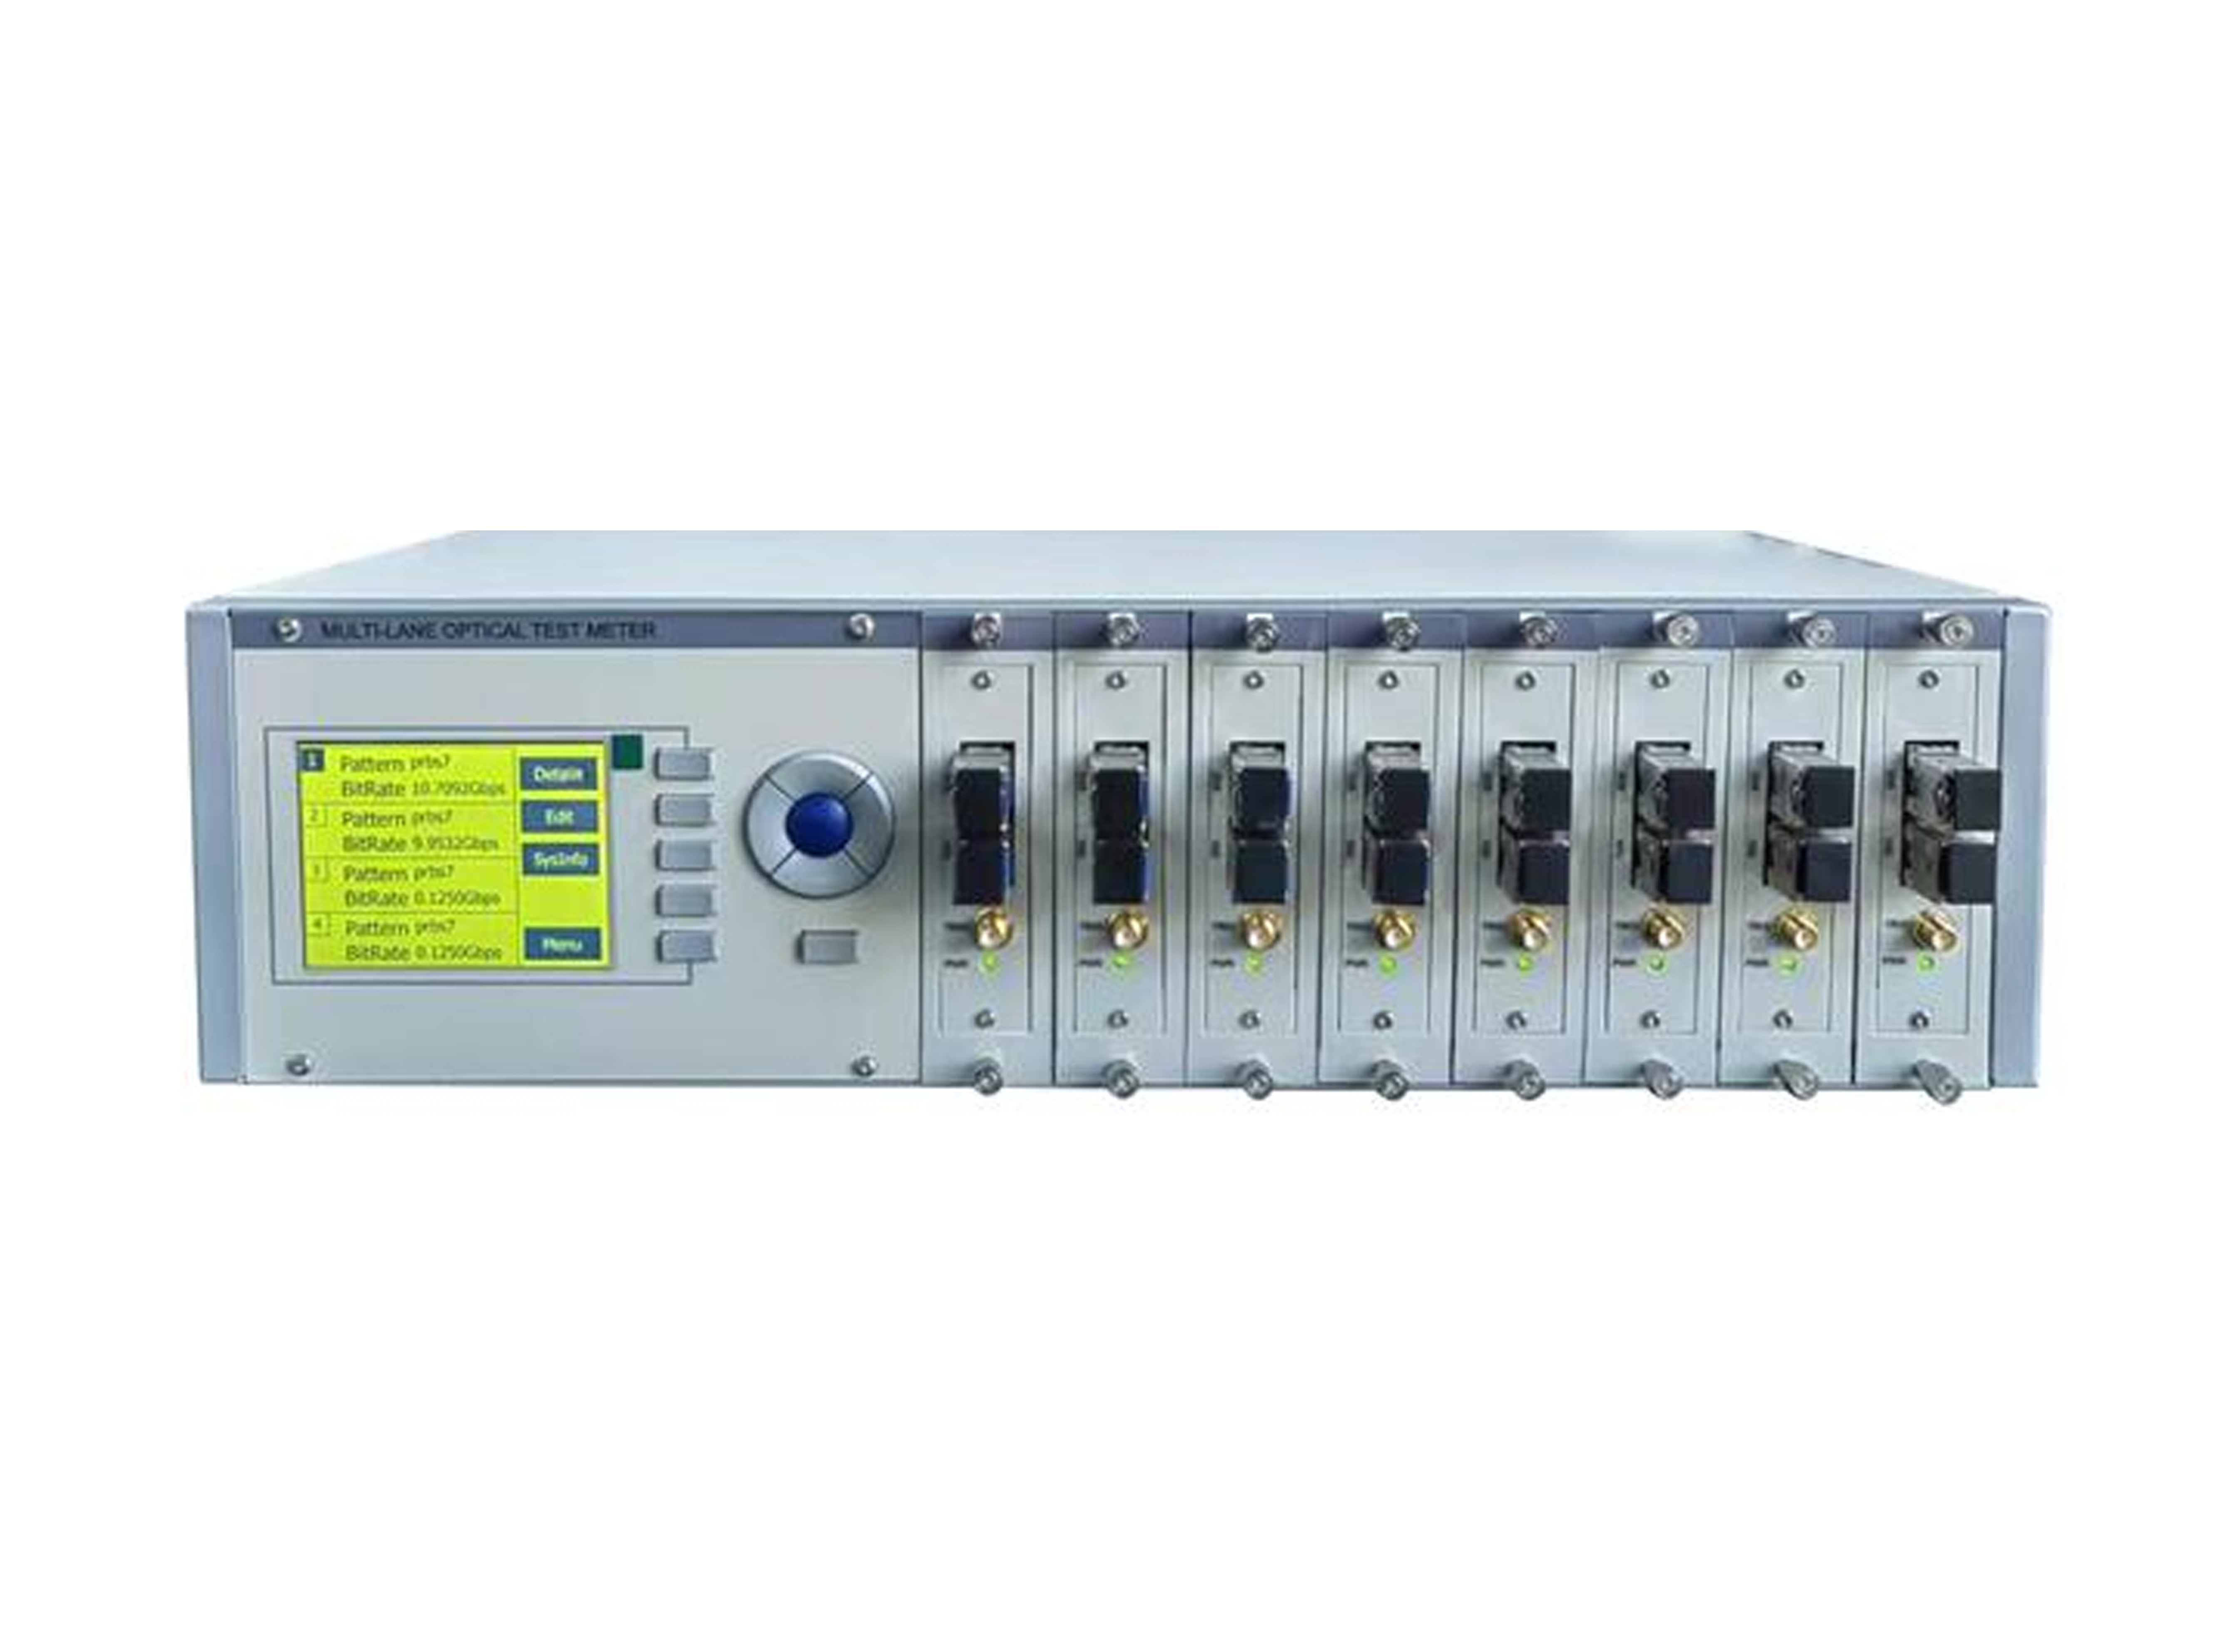 C2500-10GBERT8 Dual Channel Bit Generator